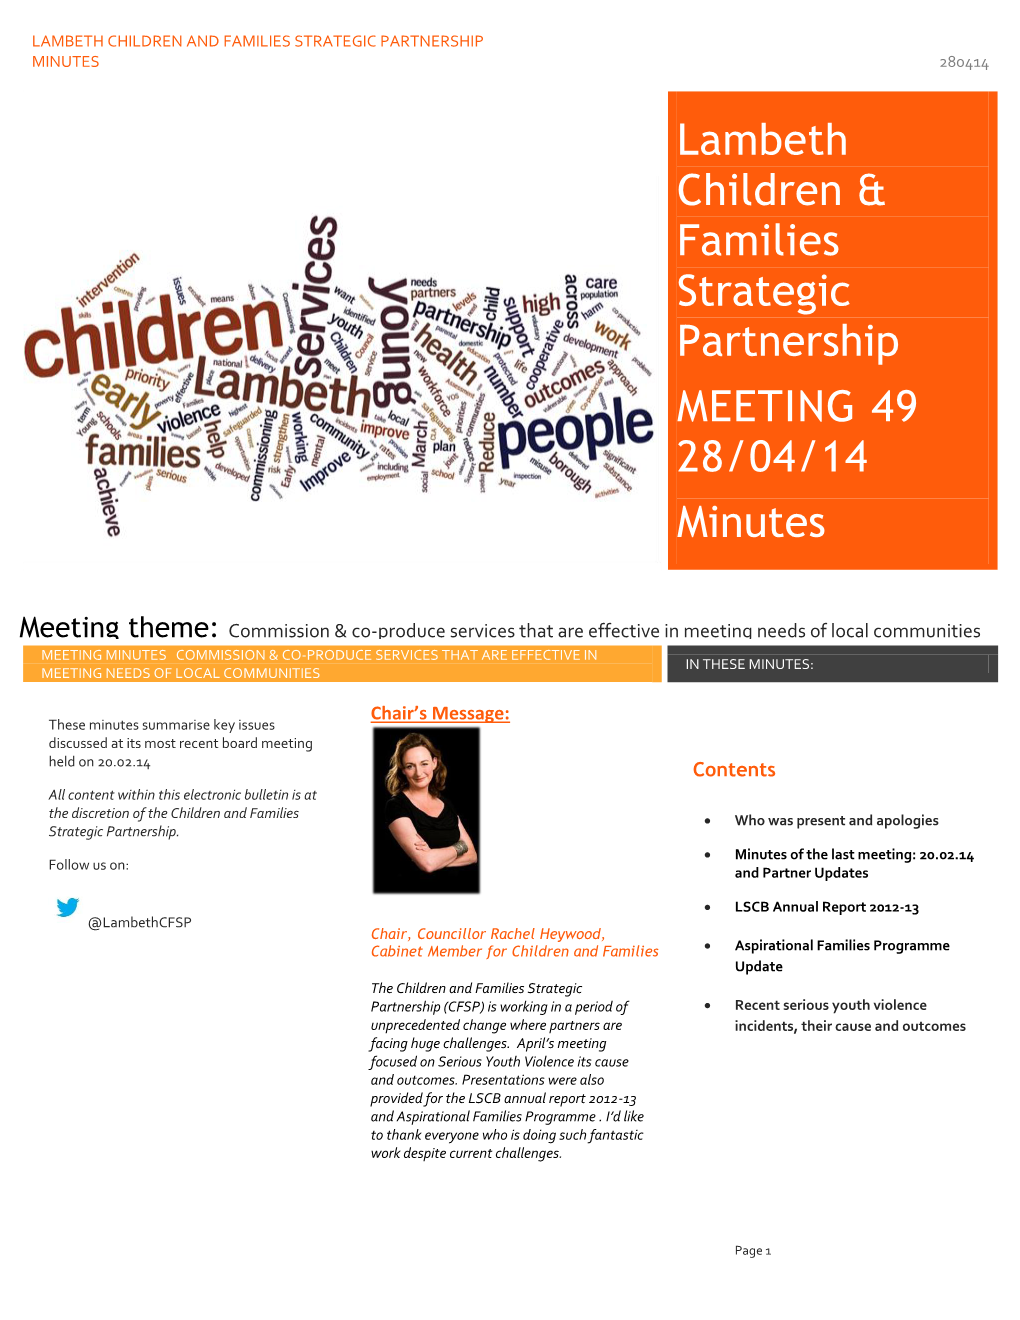 Lambeth Children & Families Strategic Partnership MEETING 49 28/04/14